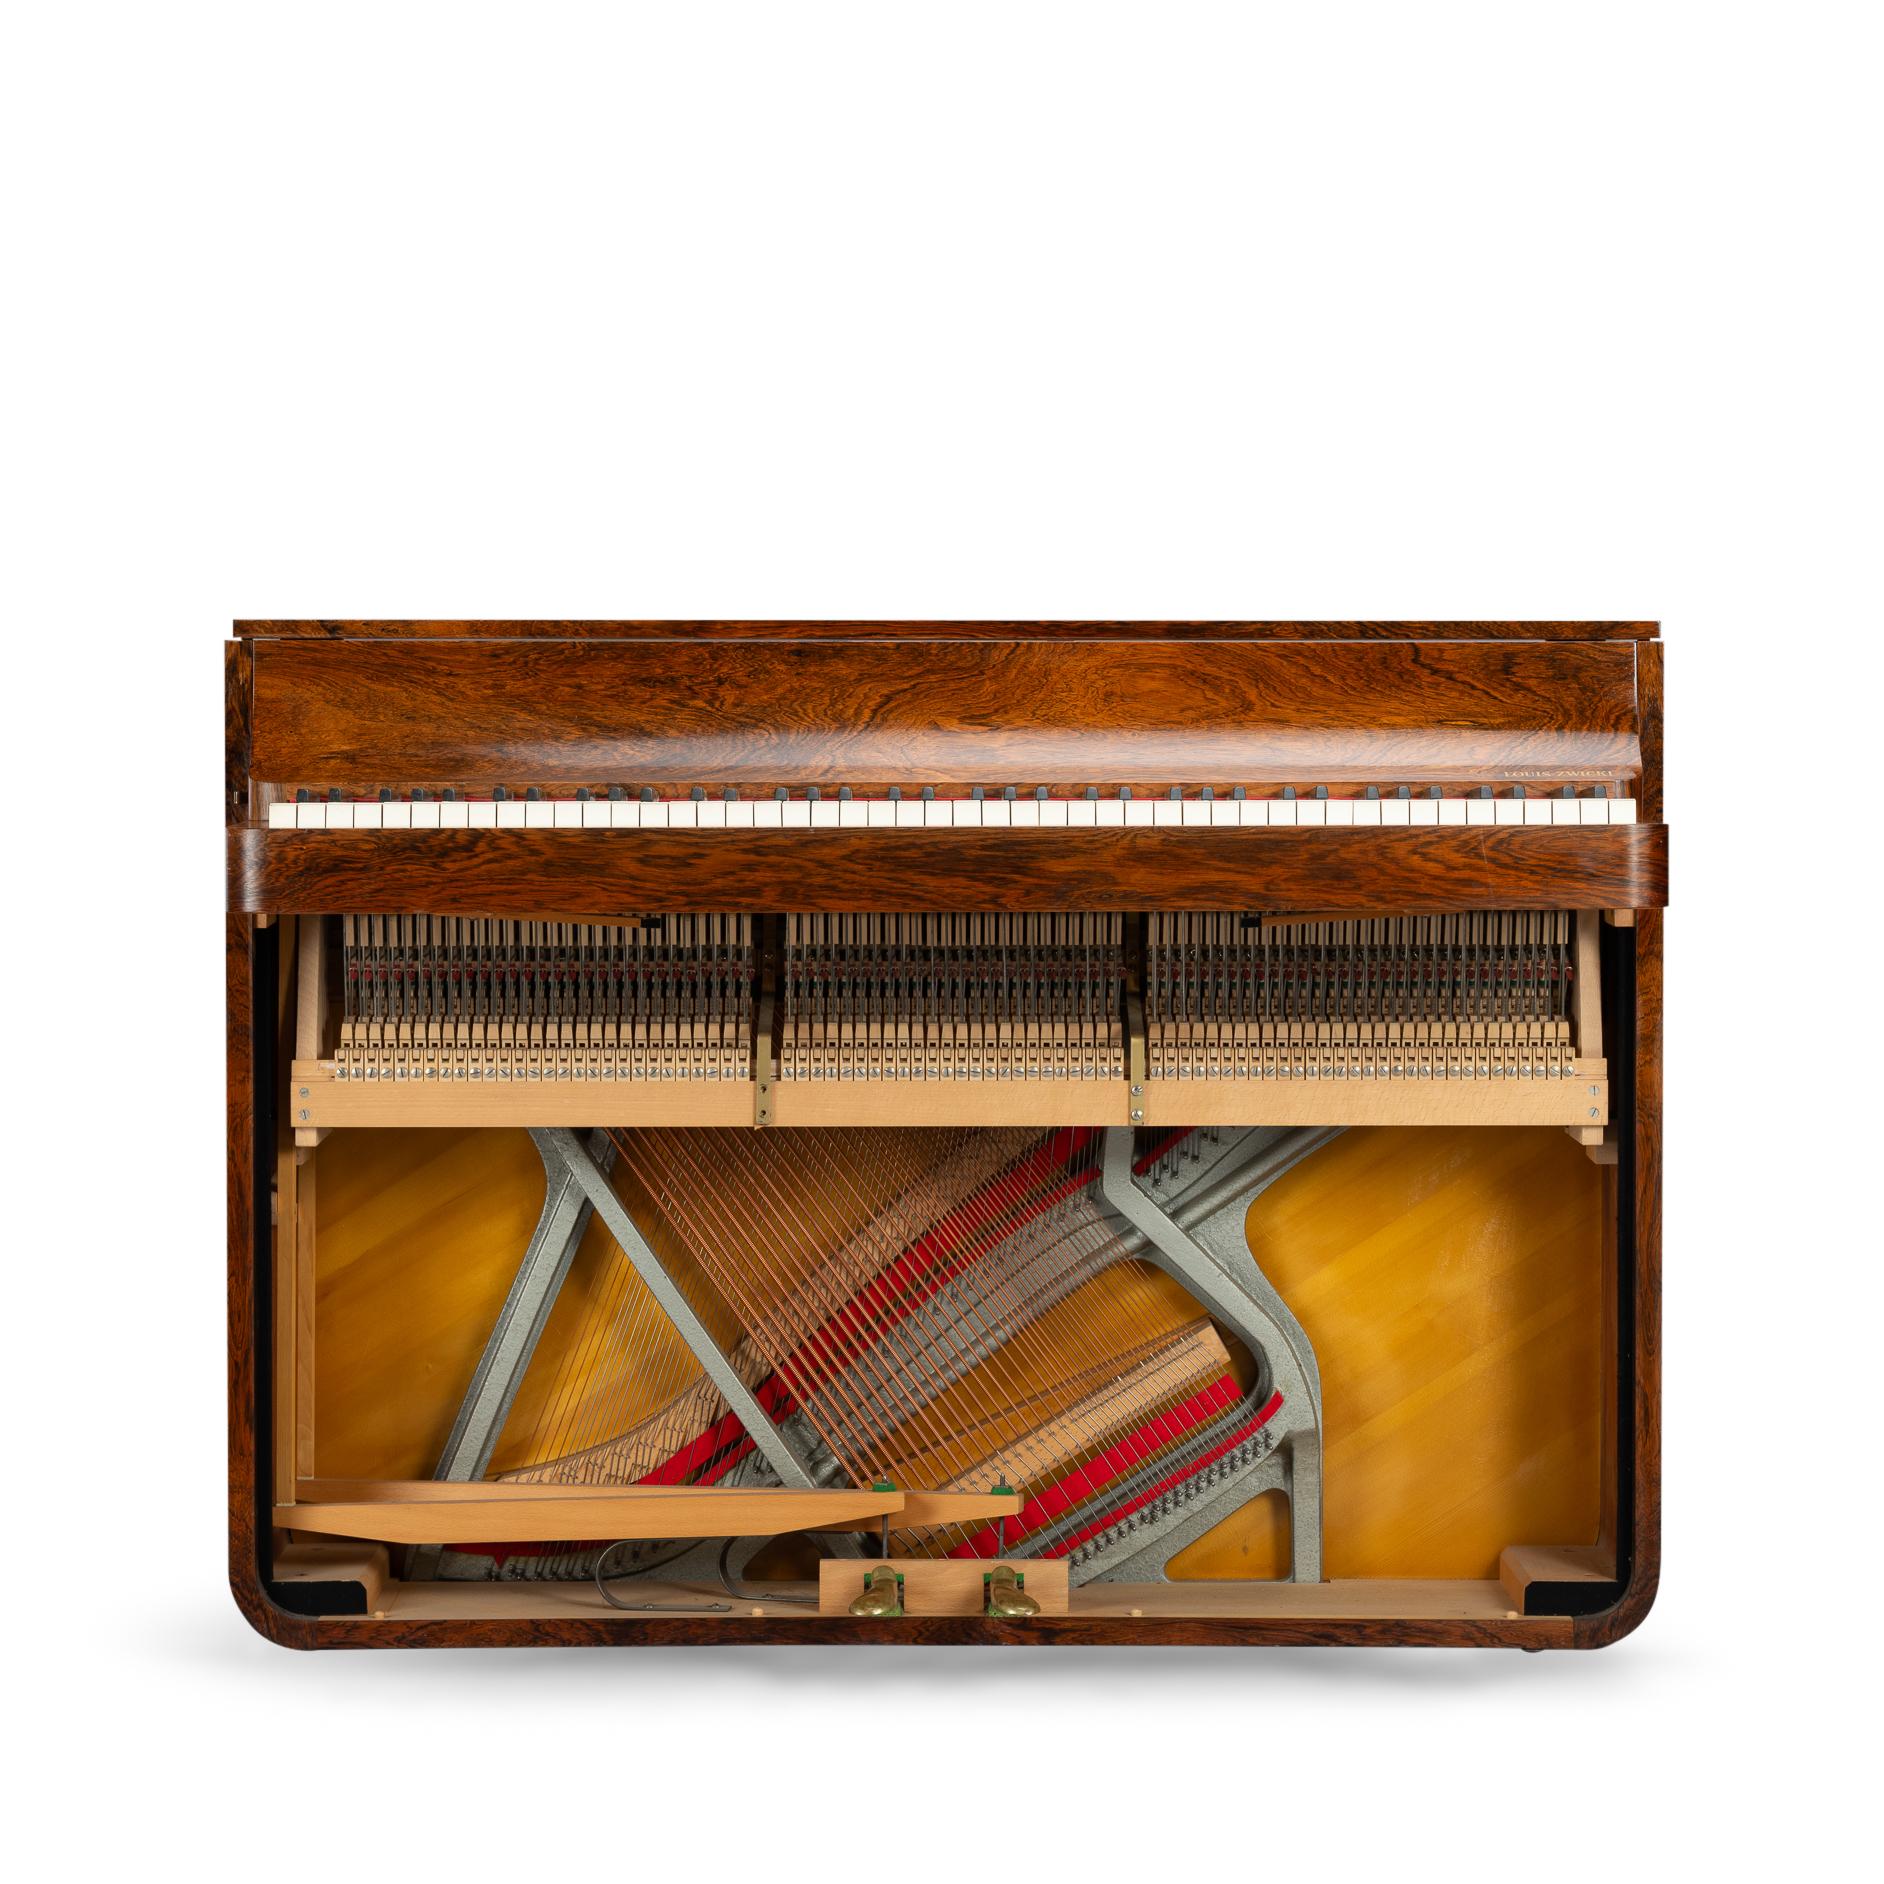 Veneer Danish Design Midcentury Rosewood Pianette by Louis Zwicki, 1950s For Sale